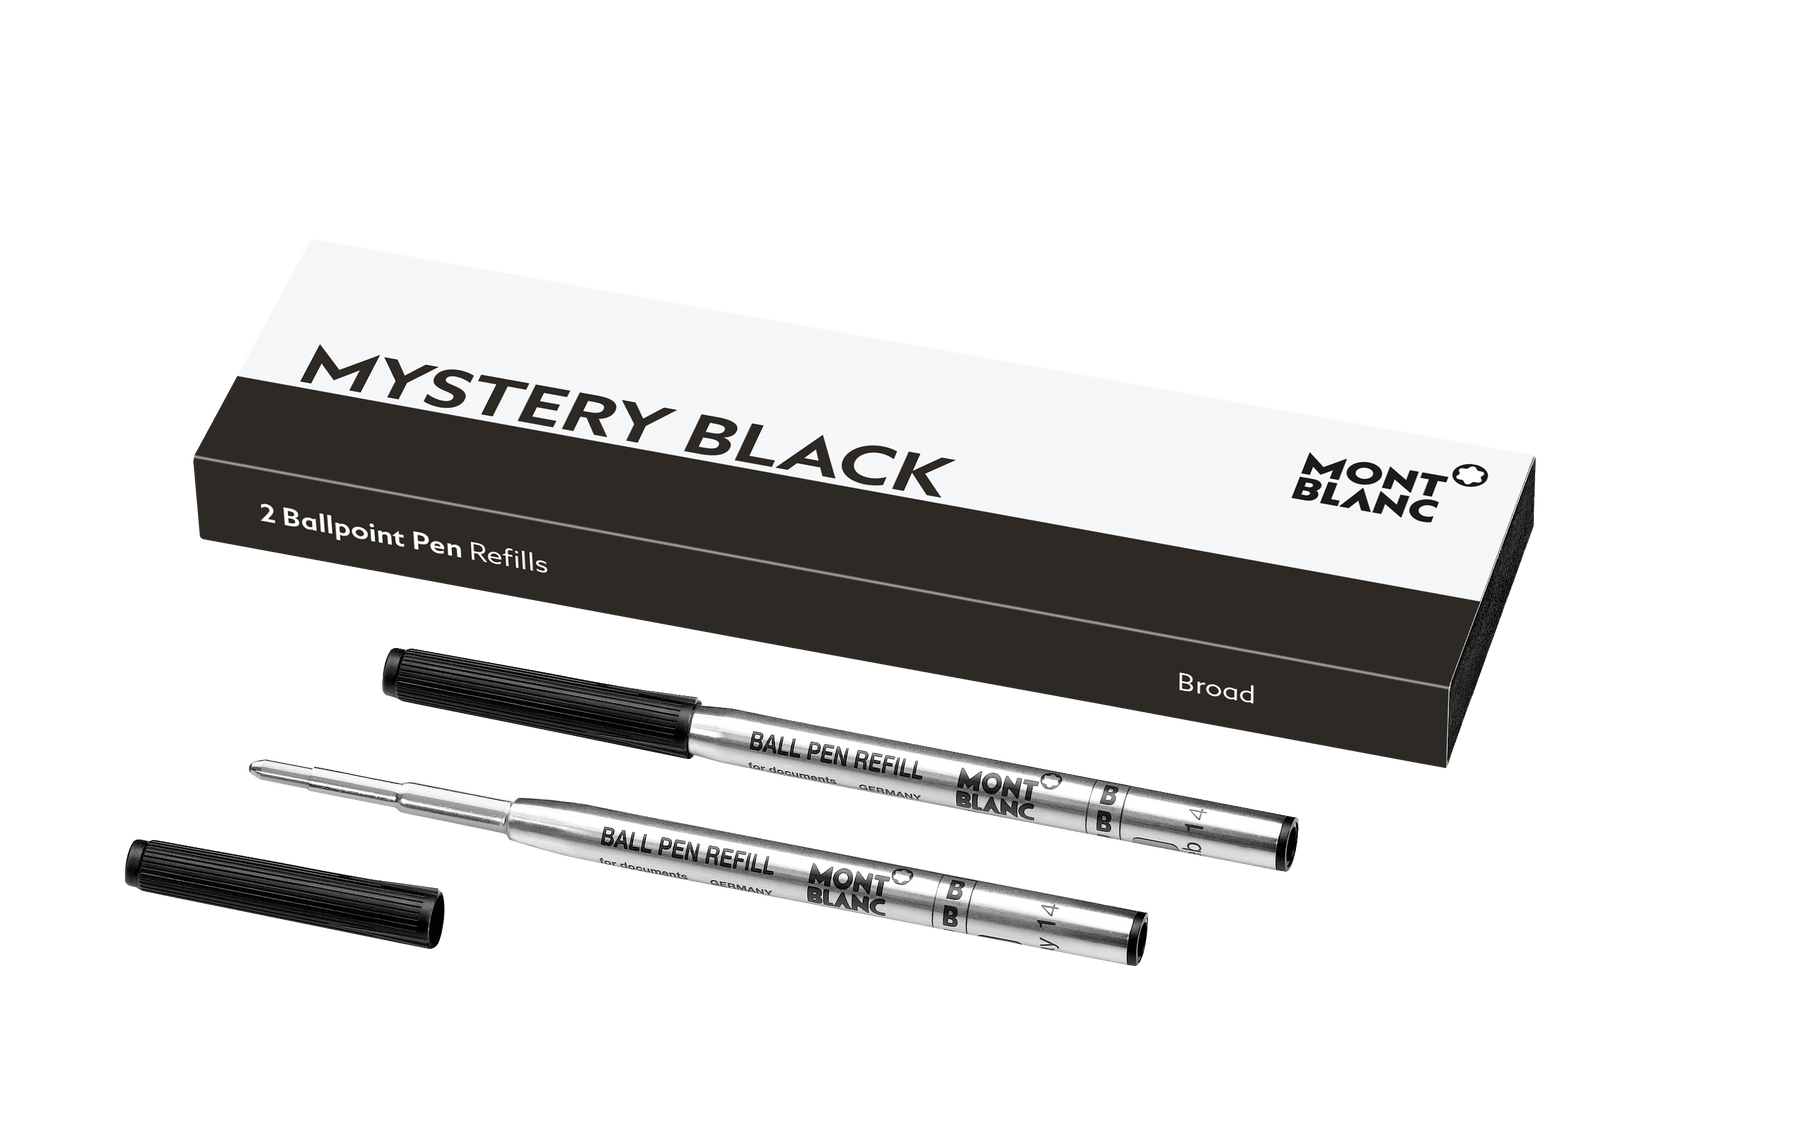 2 Ballpoint Pen Refill Broad, Mystery Black